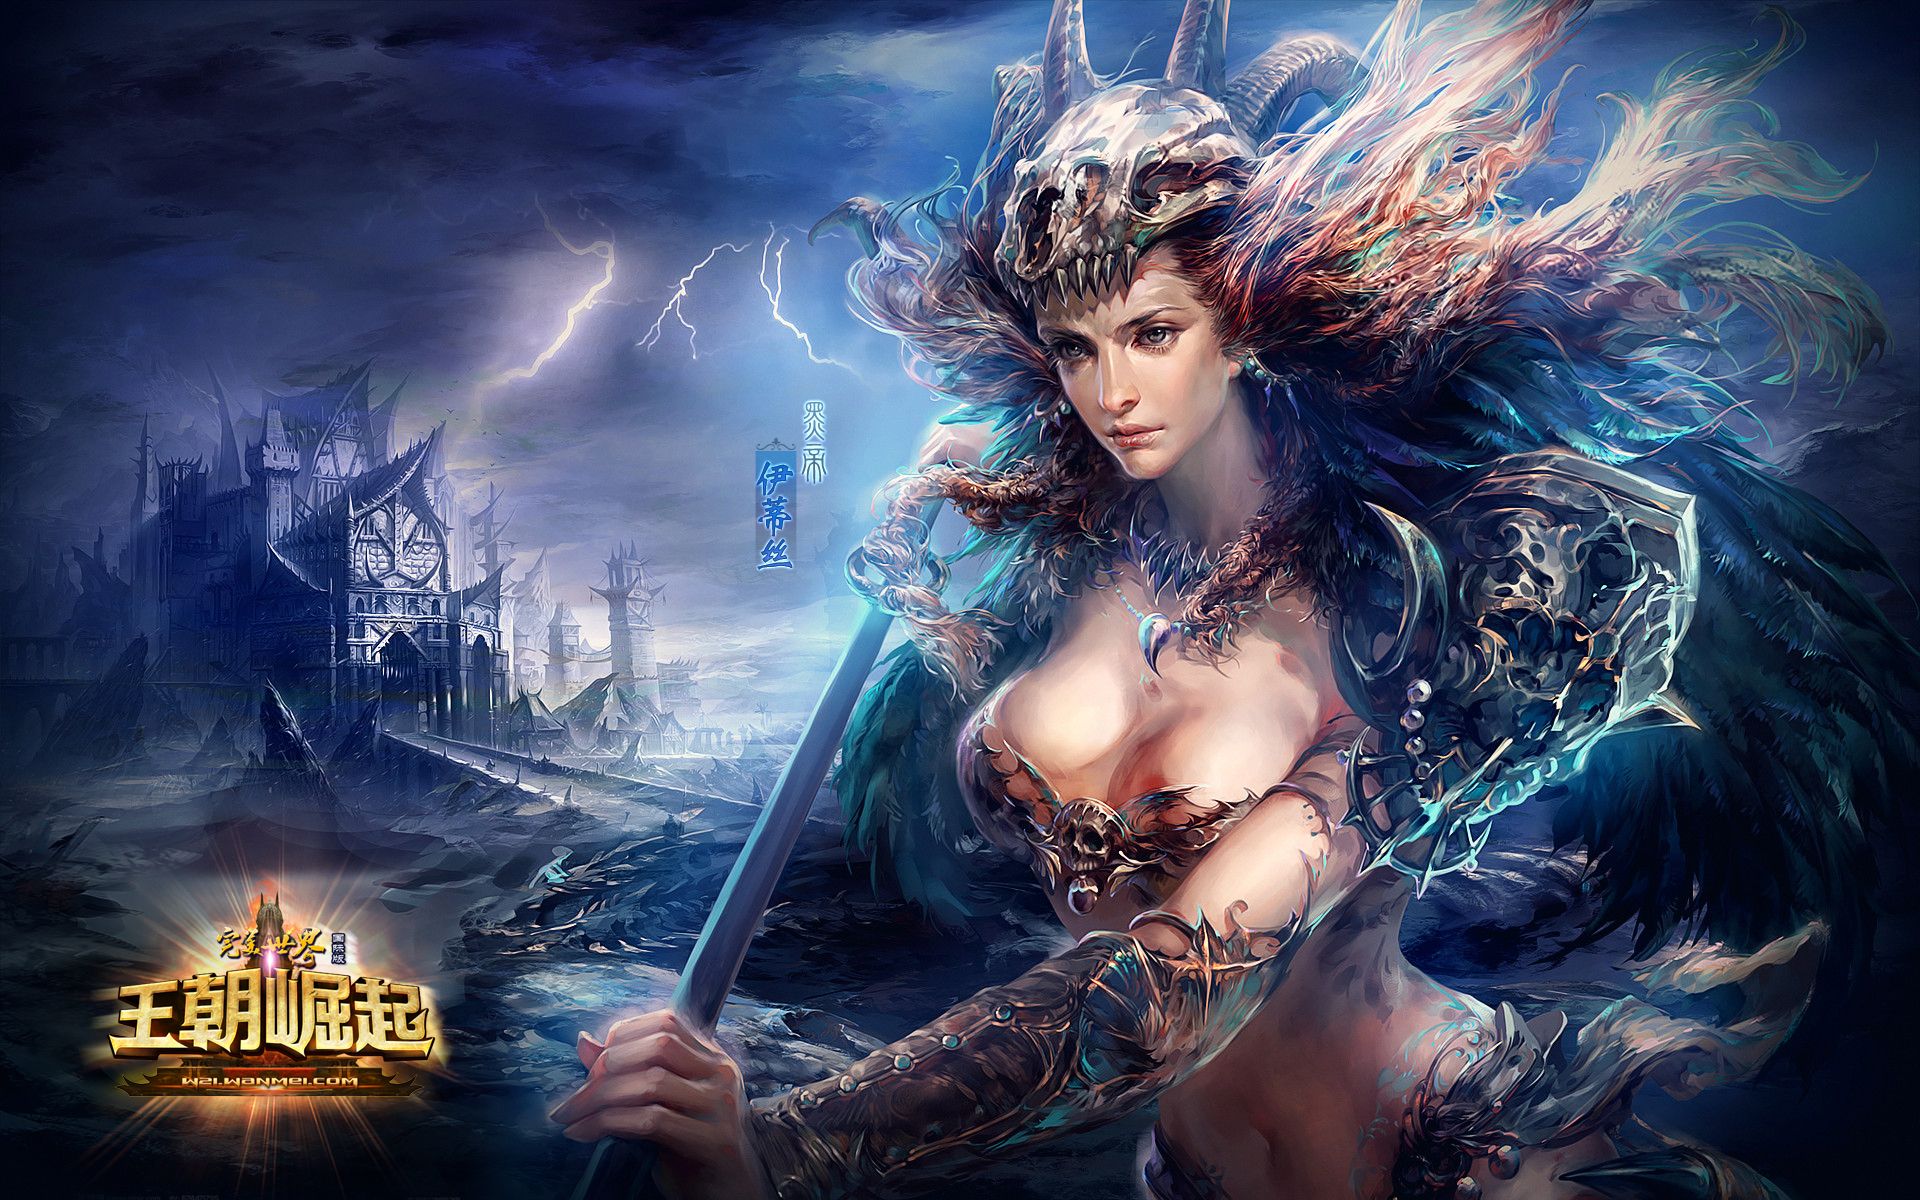 Perfect World Video Game Fantasy Girl, Warrior, Armor, Sword Wallpaper, Wallpaper13.com